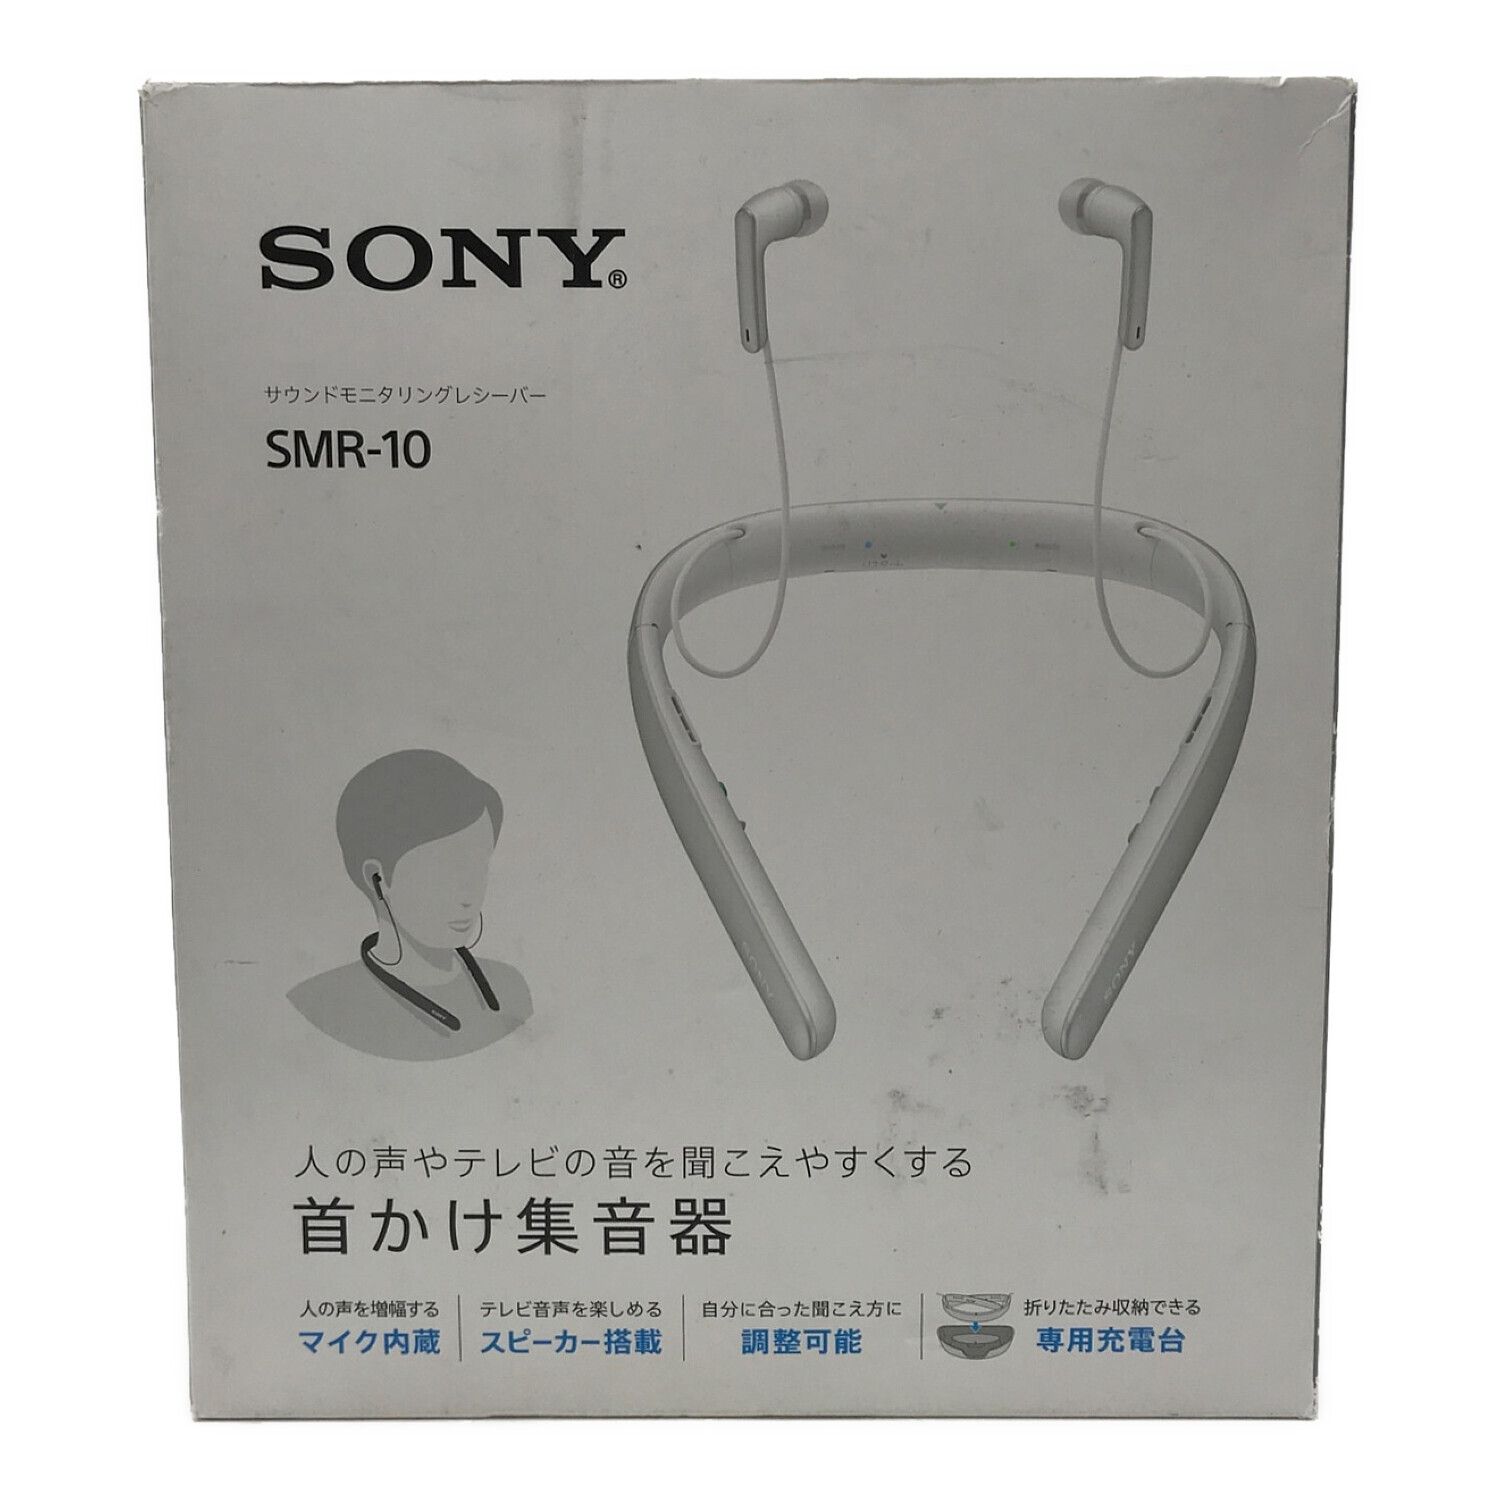 SONY (ソニー) サウンドモニタリングレシーバー SMR-10 -｜トレファク